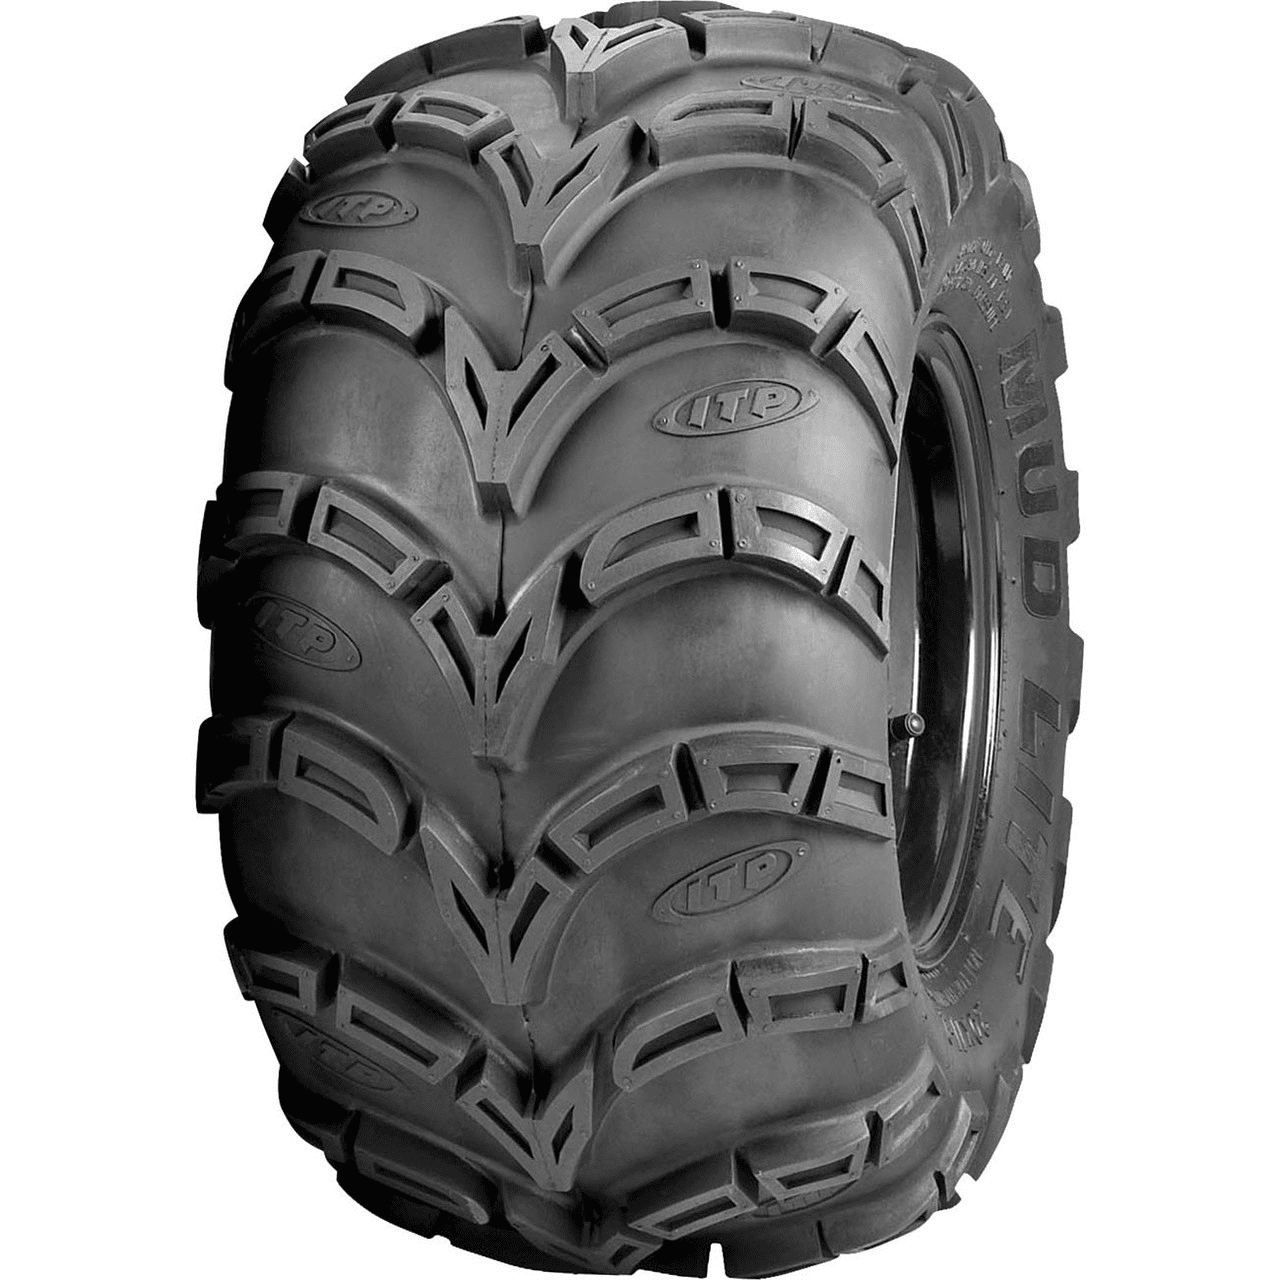 ITP Mud Lite AT Tire 22x8-10 